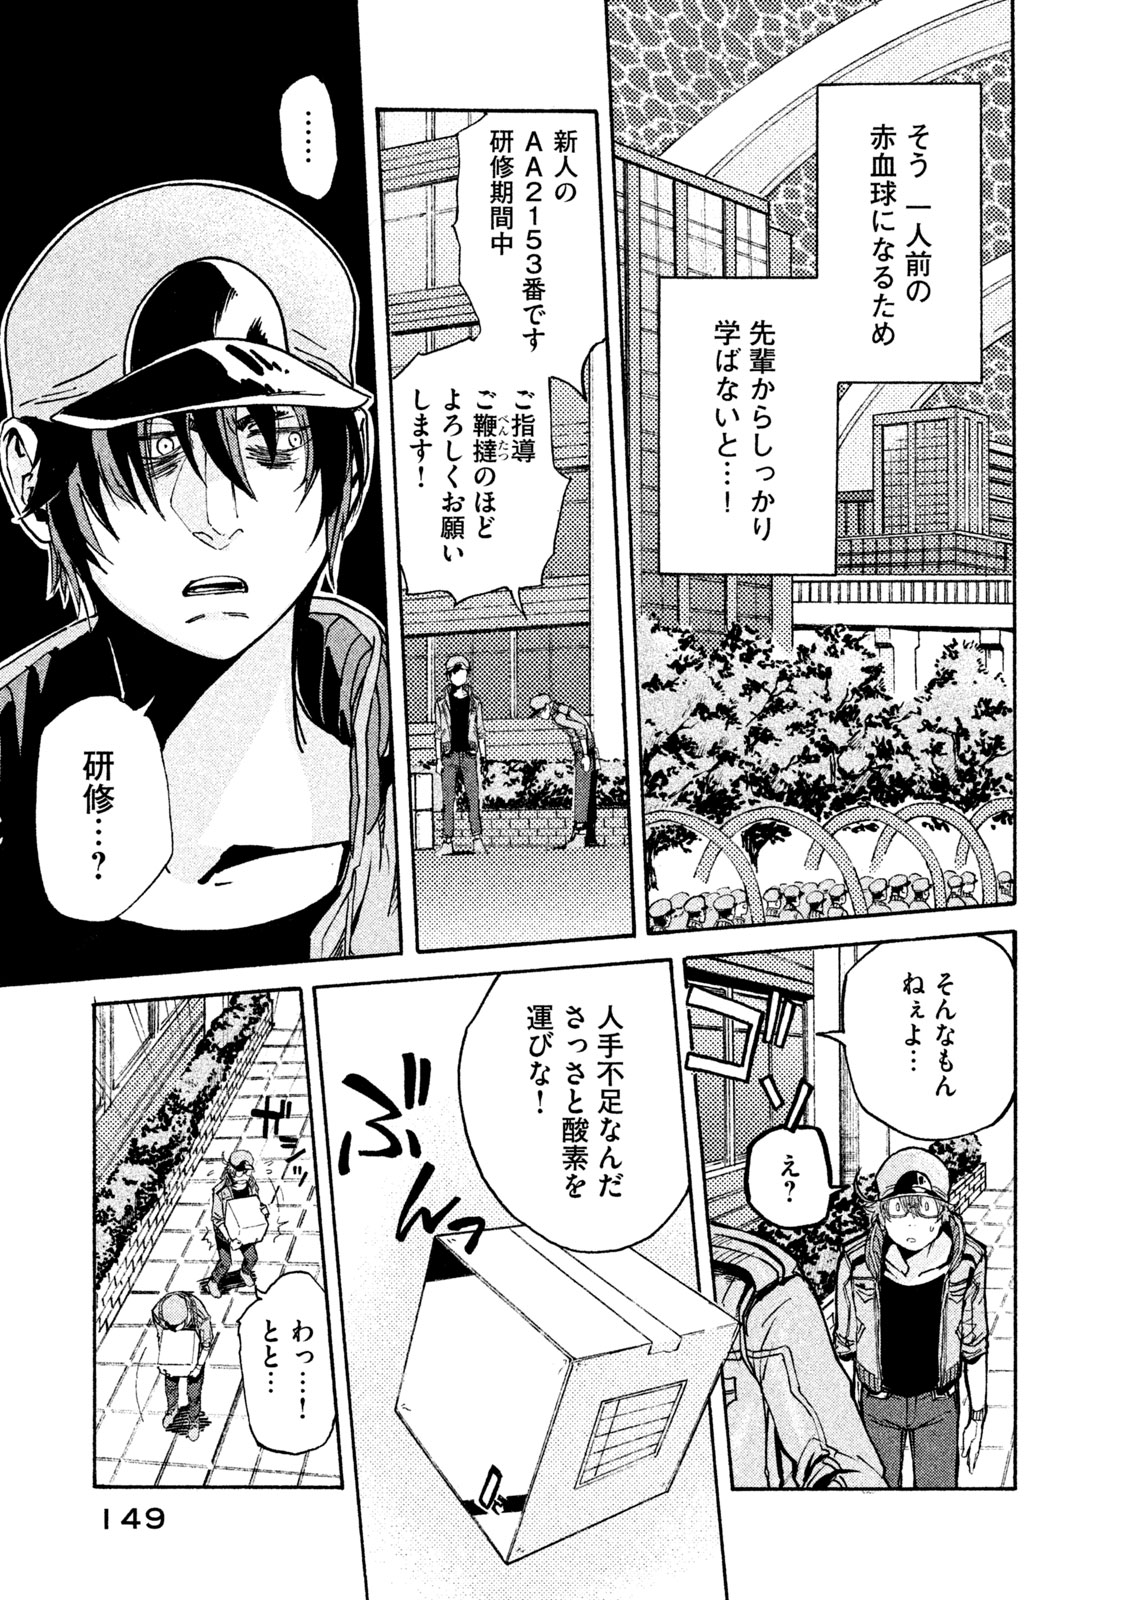 Hataraku Saibou BLACK - Chapter 24 - Page 23